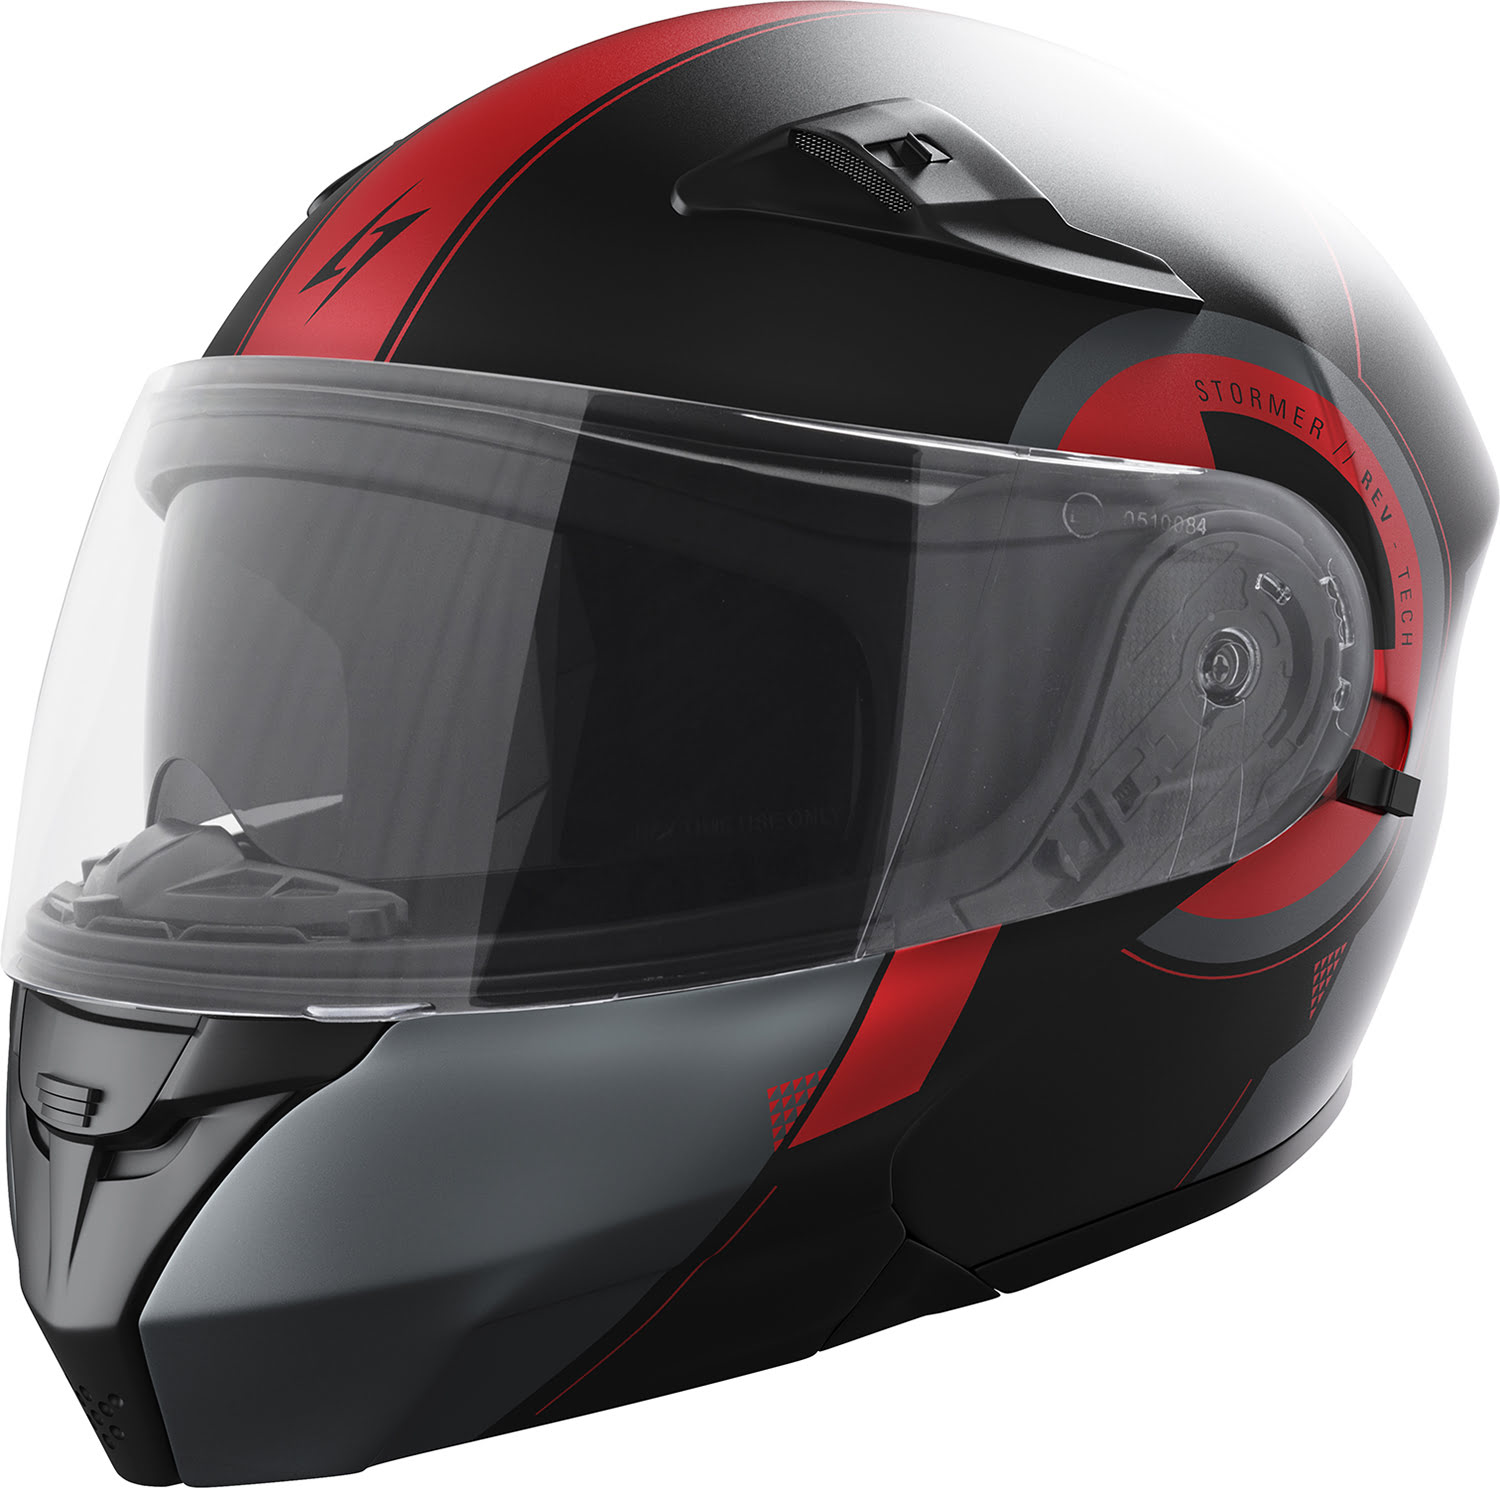 Helmet TURN REV-TECH Red Metal Matt STORMER 